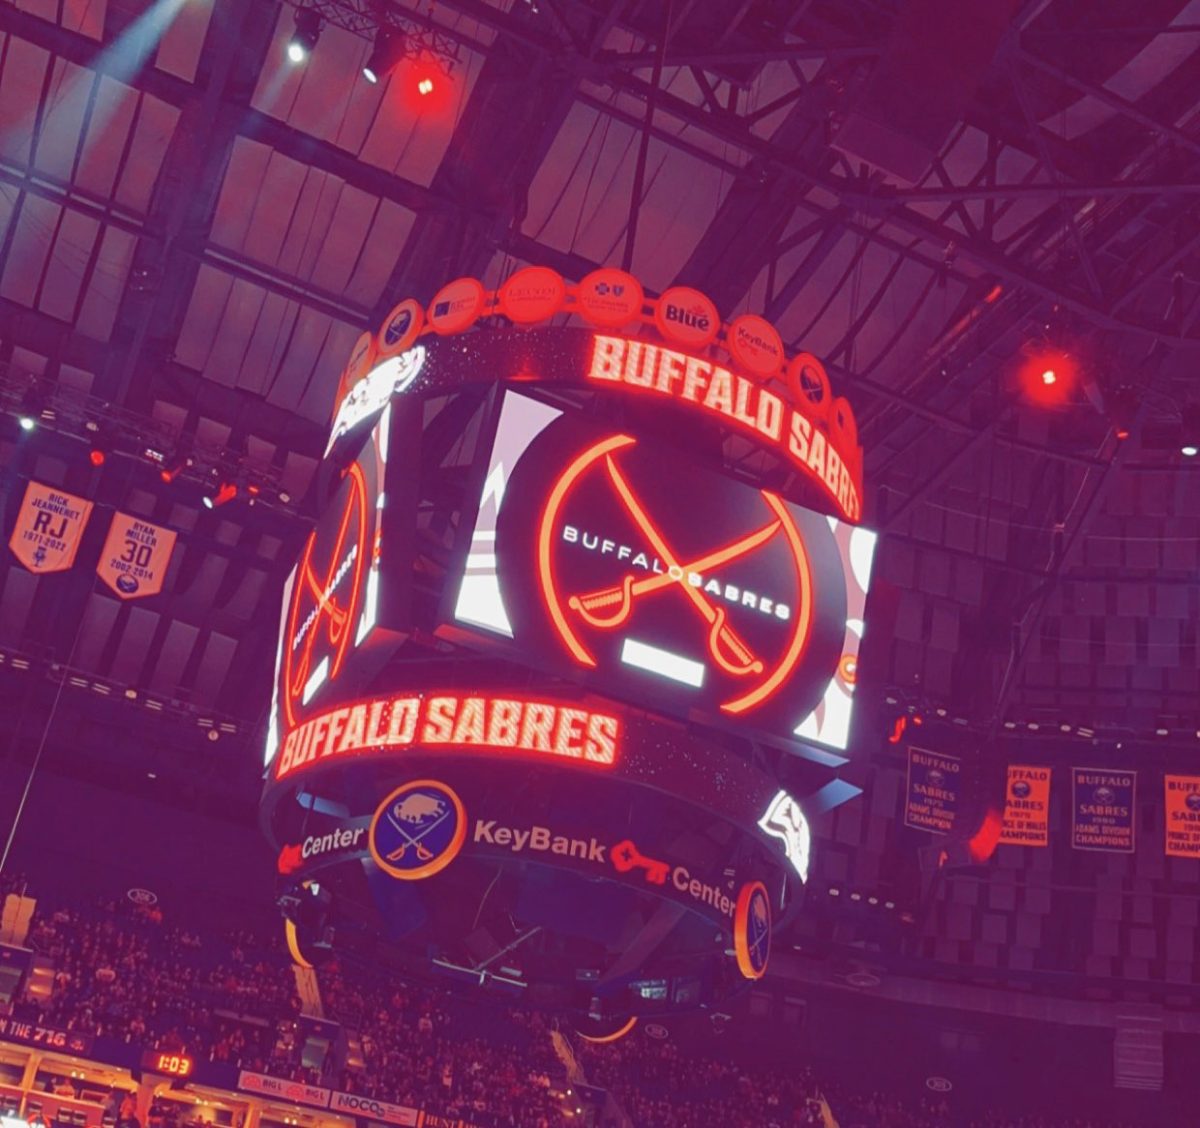 Buffalo Sabres jumbotron featuring the teams alternate logo.